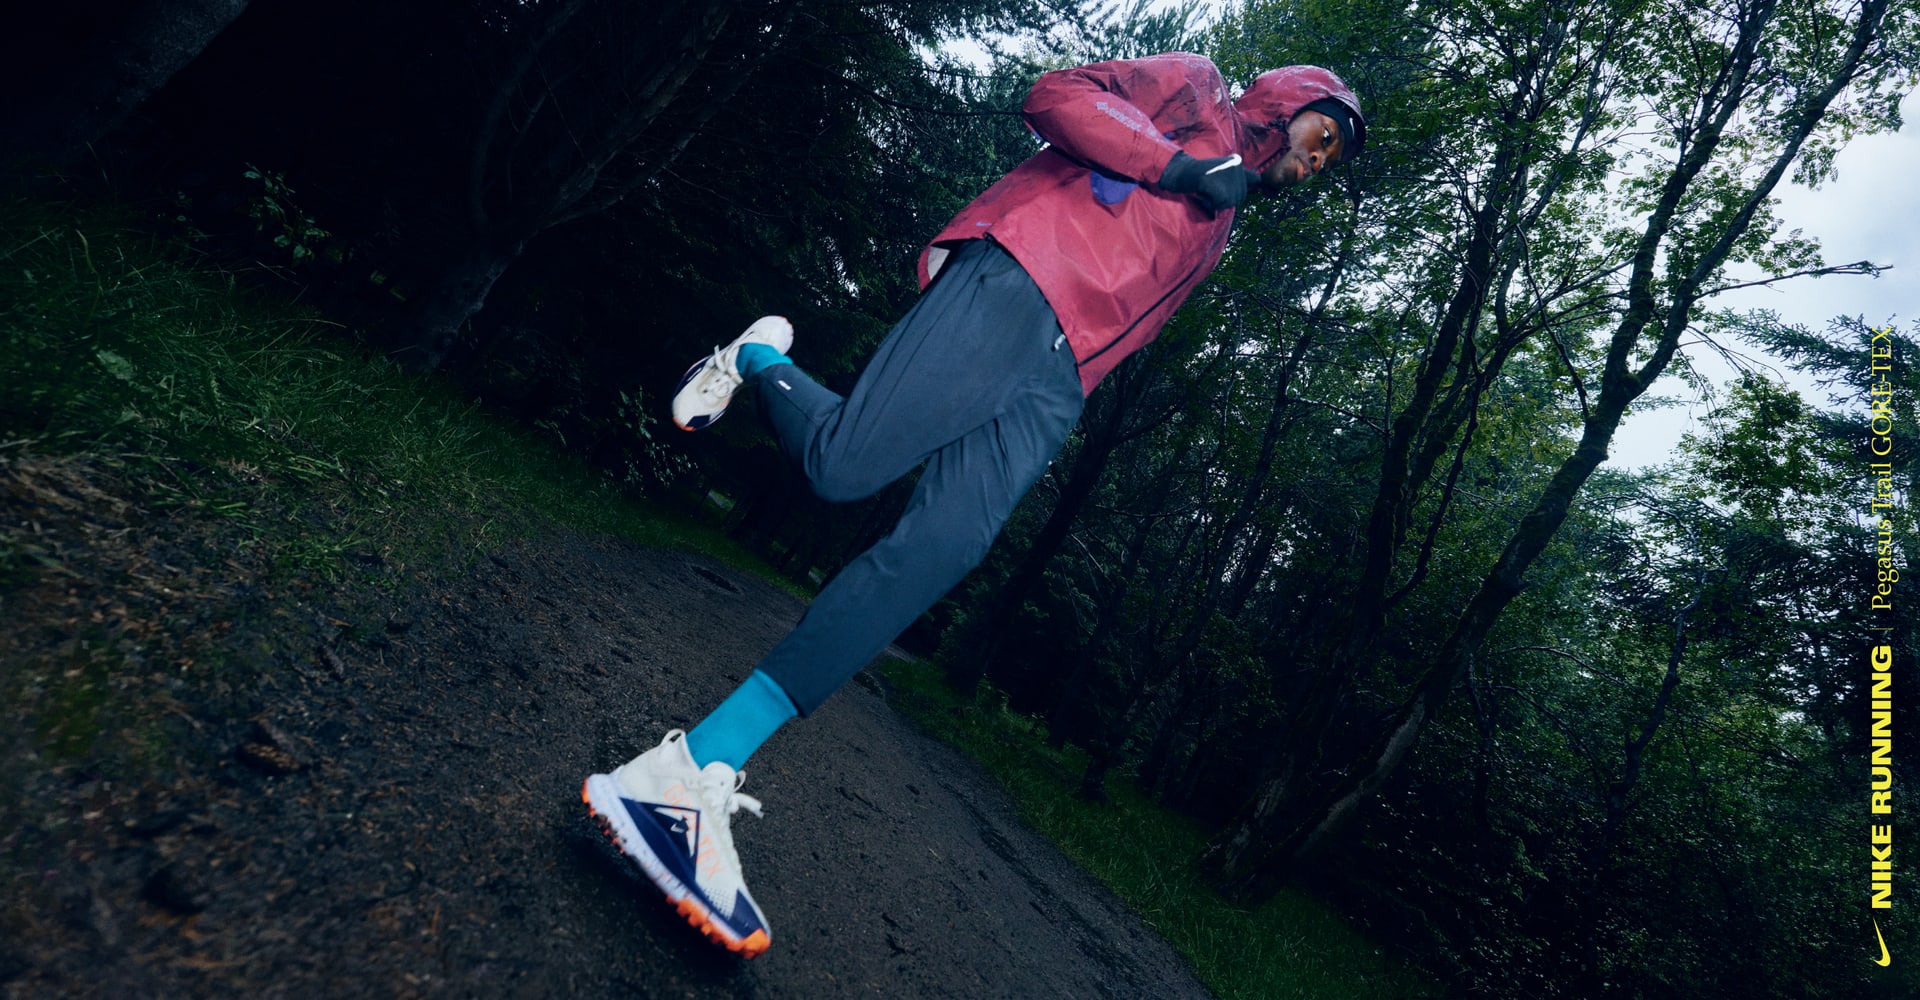 Nike Pegasus Trail 4 GORE-TEX Men's Waterproof Trail-Running Shoes